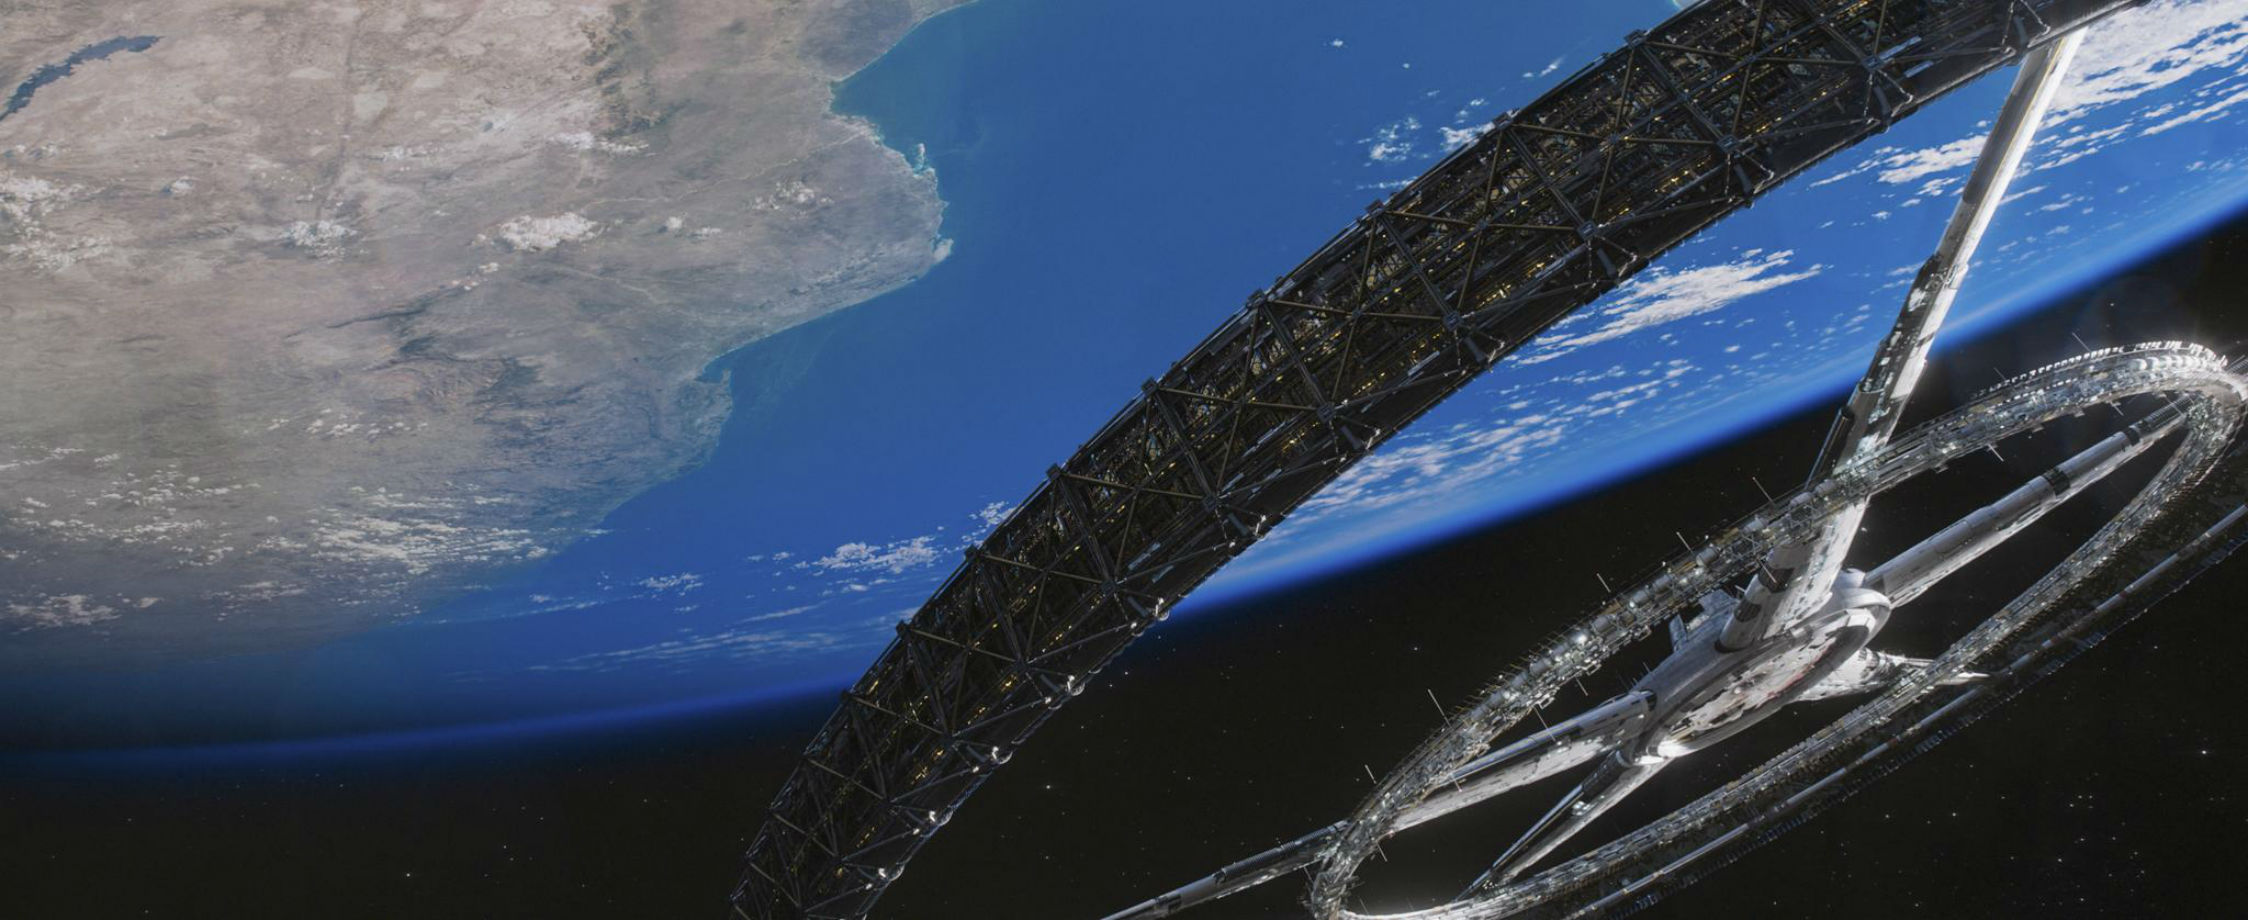 elysium, 2013, Sci fi, Futuristic, Apocalyptic, Future, Spaceship, Space, Planet, Planets, Earth Wallpaper